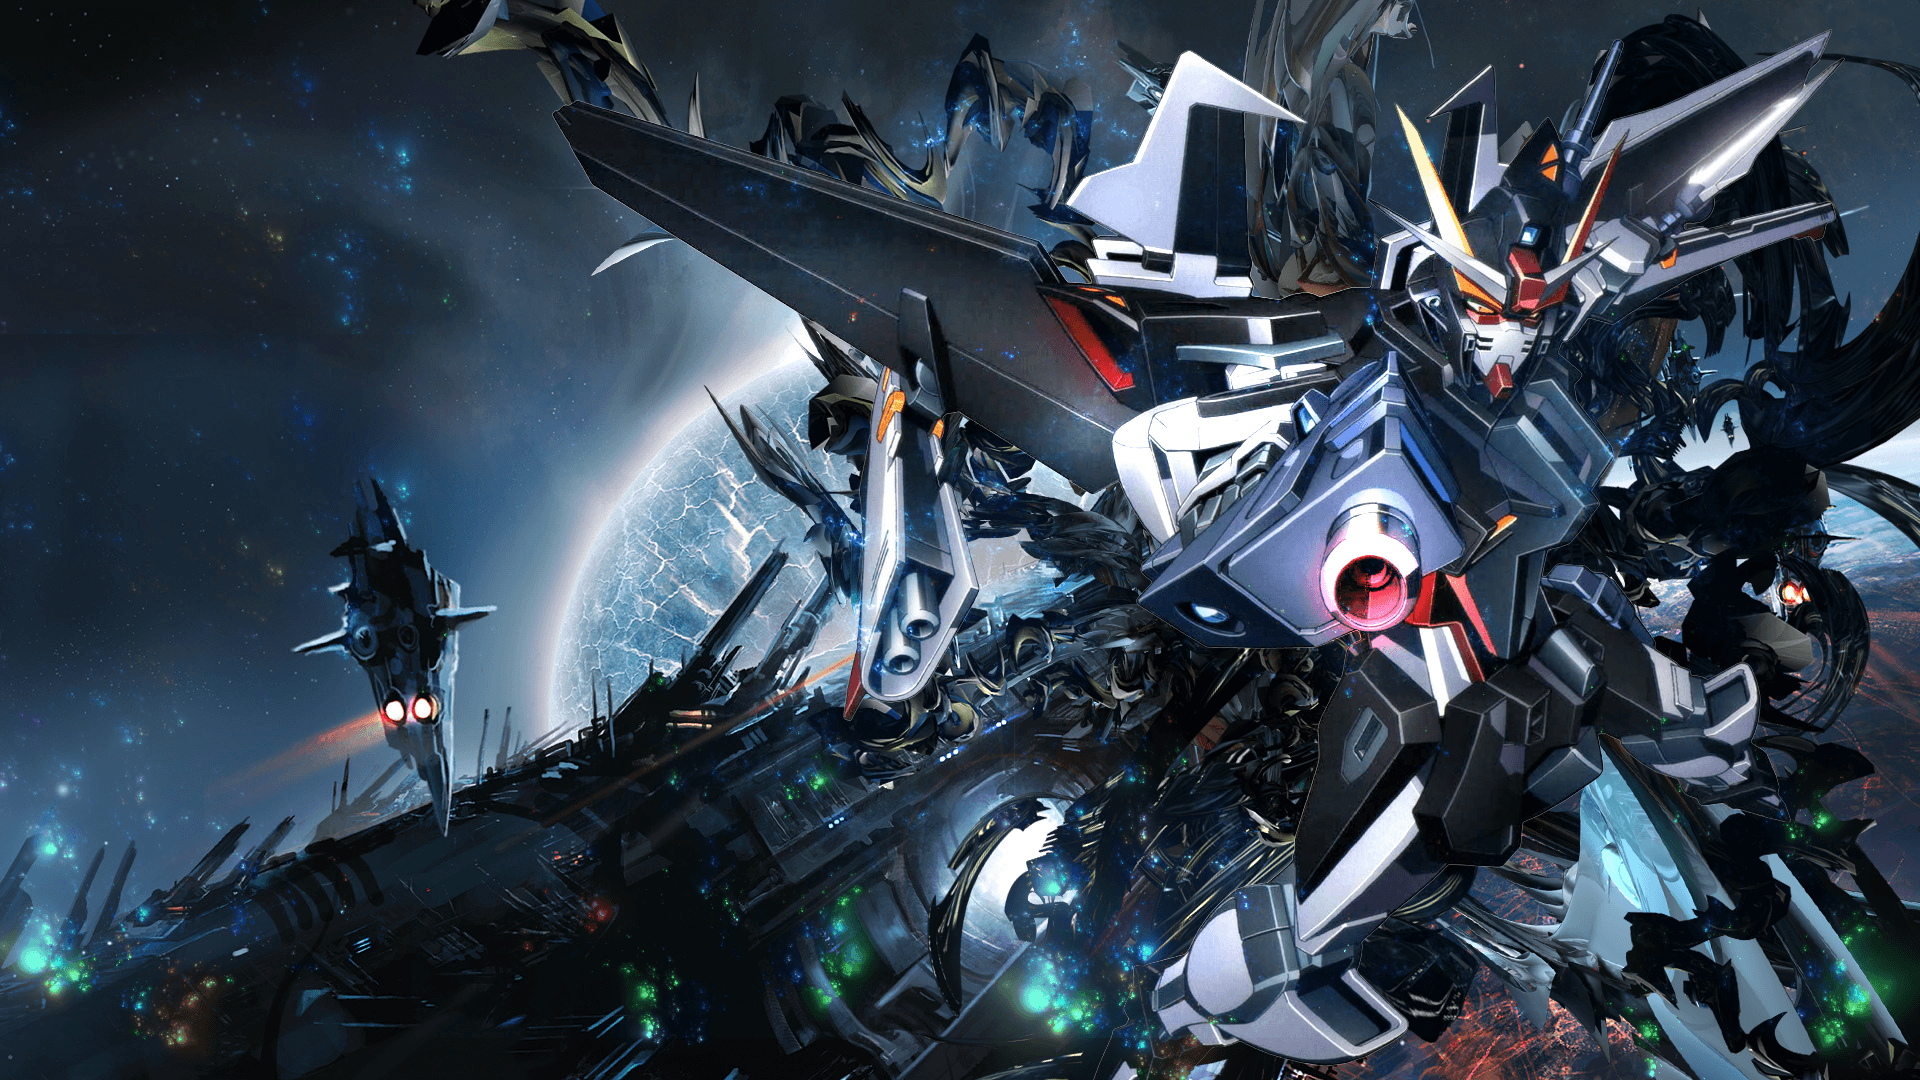 Gundam Full HD Wallpaper Widescreen Image For PC Desktop. Gundam